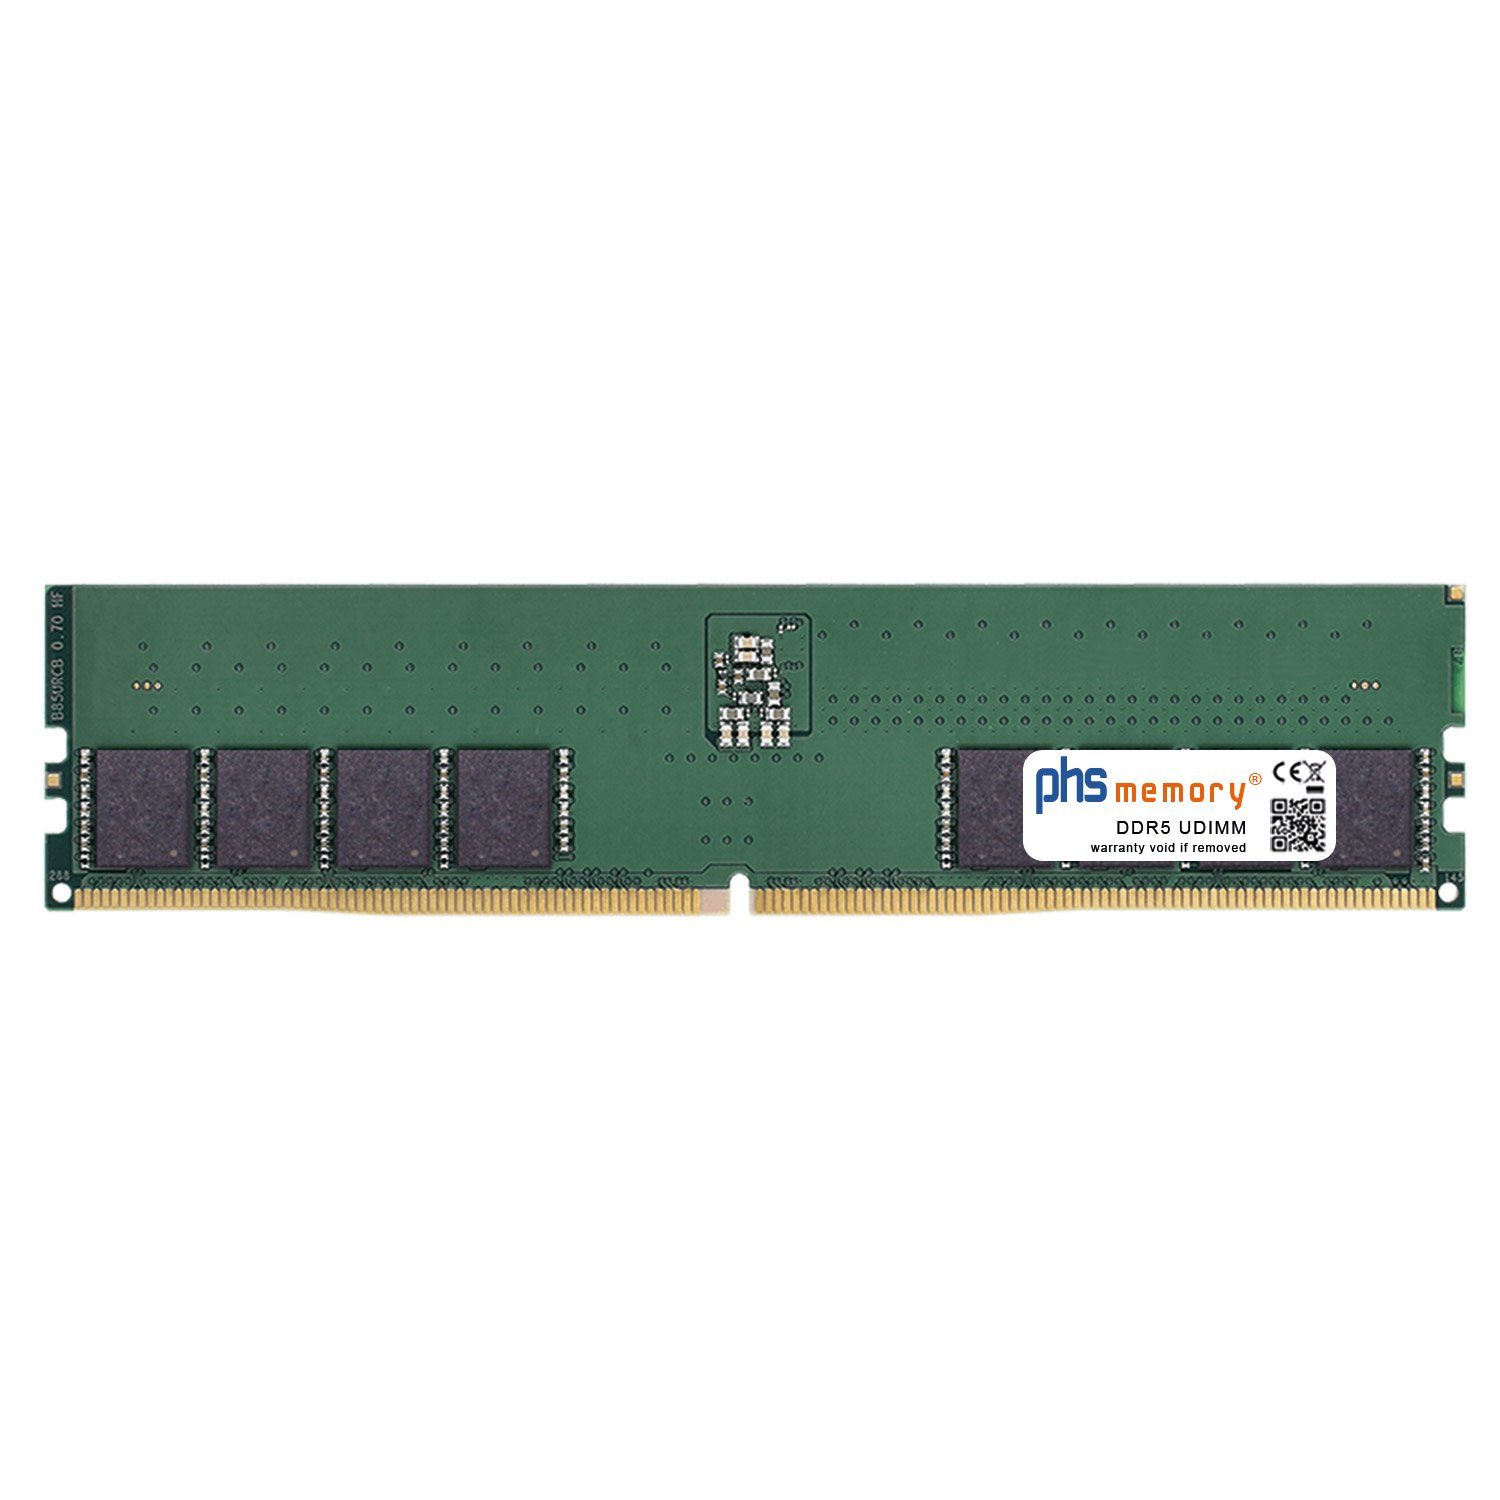 PHS-memory RAM für Captiva Ultimate Gaming R70-987 Arbeitsspeicher